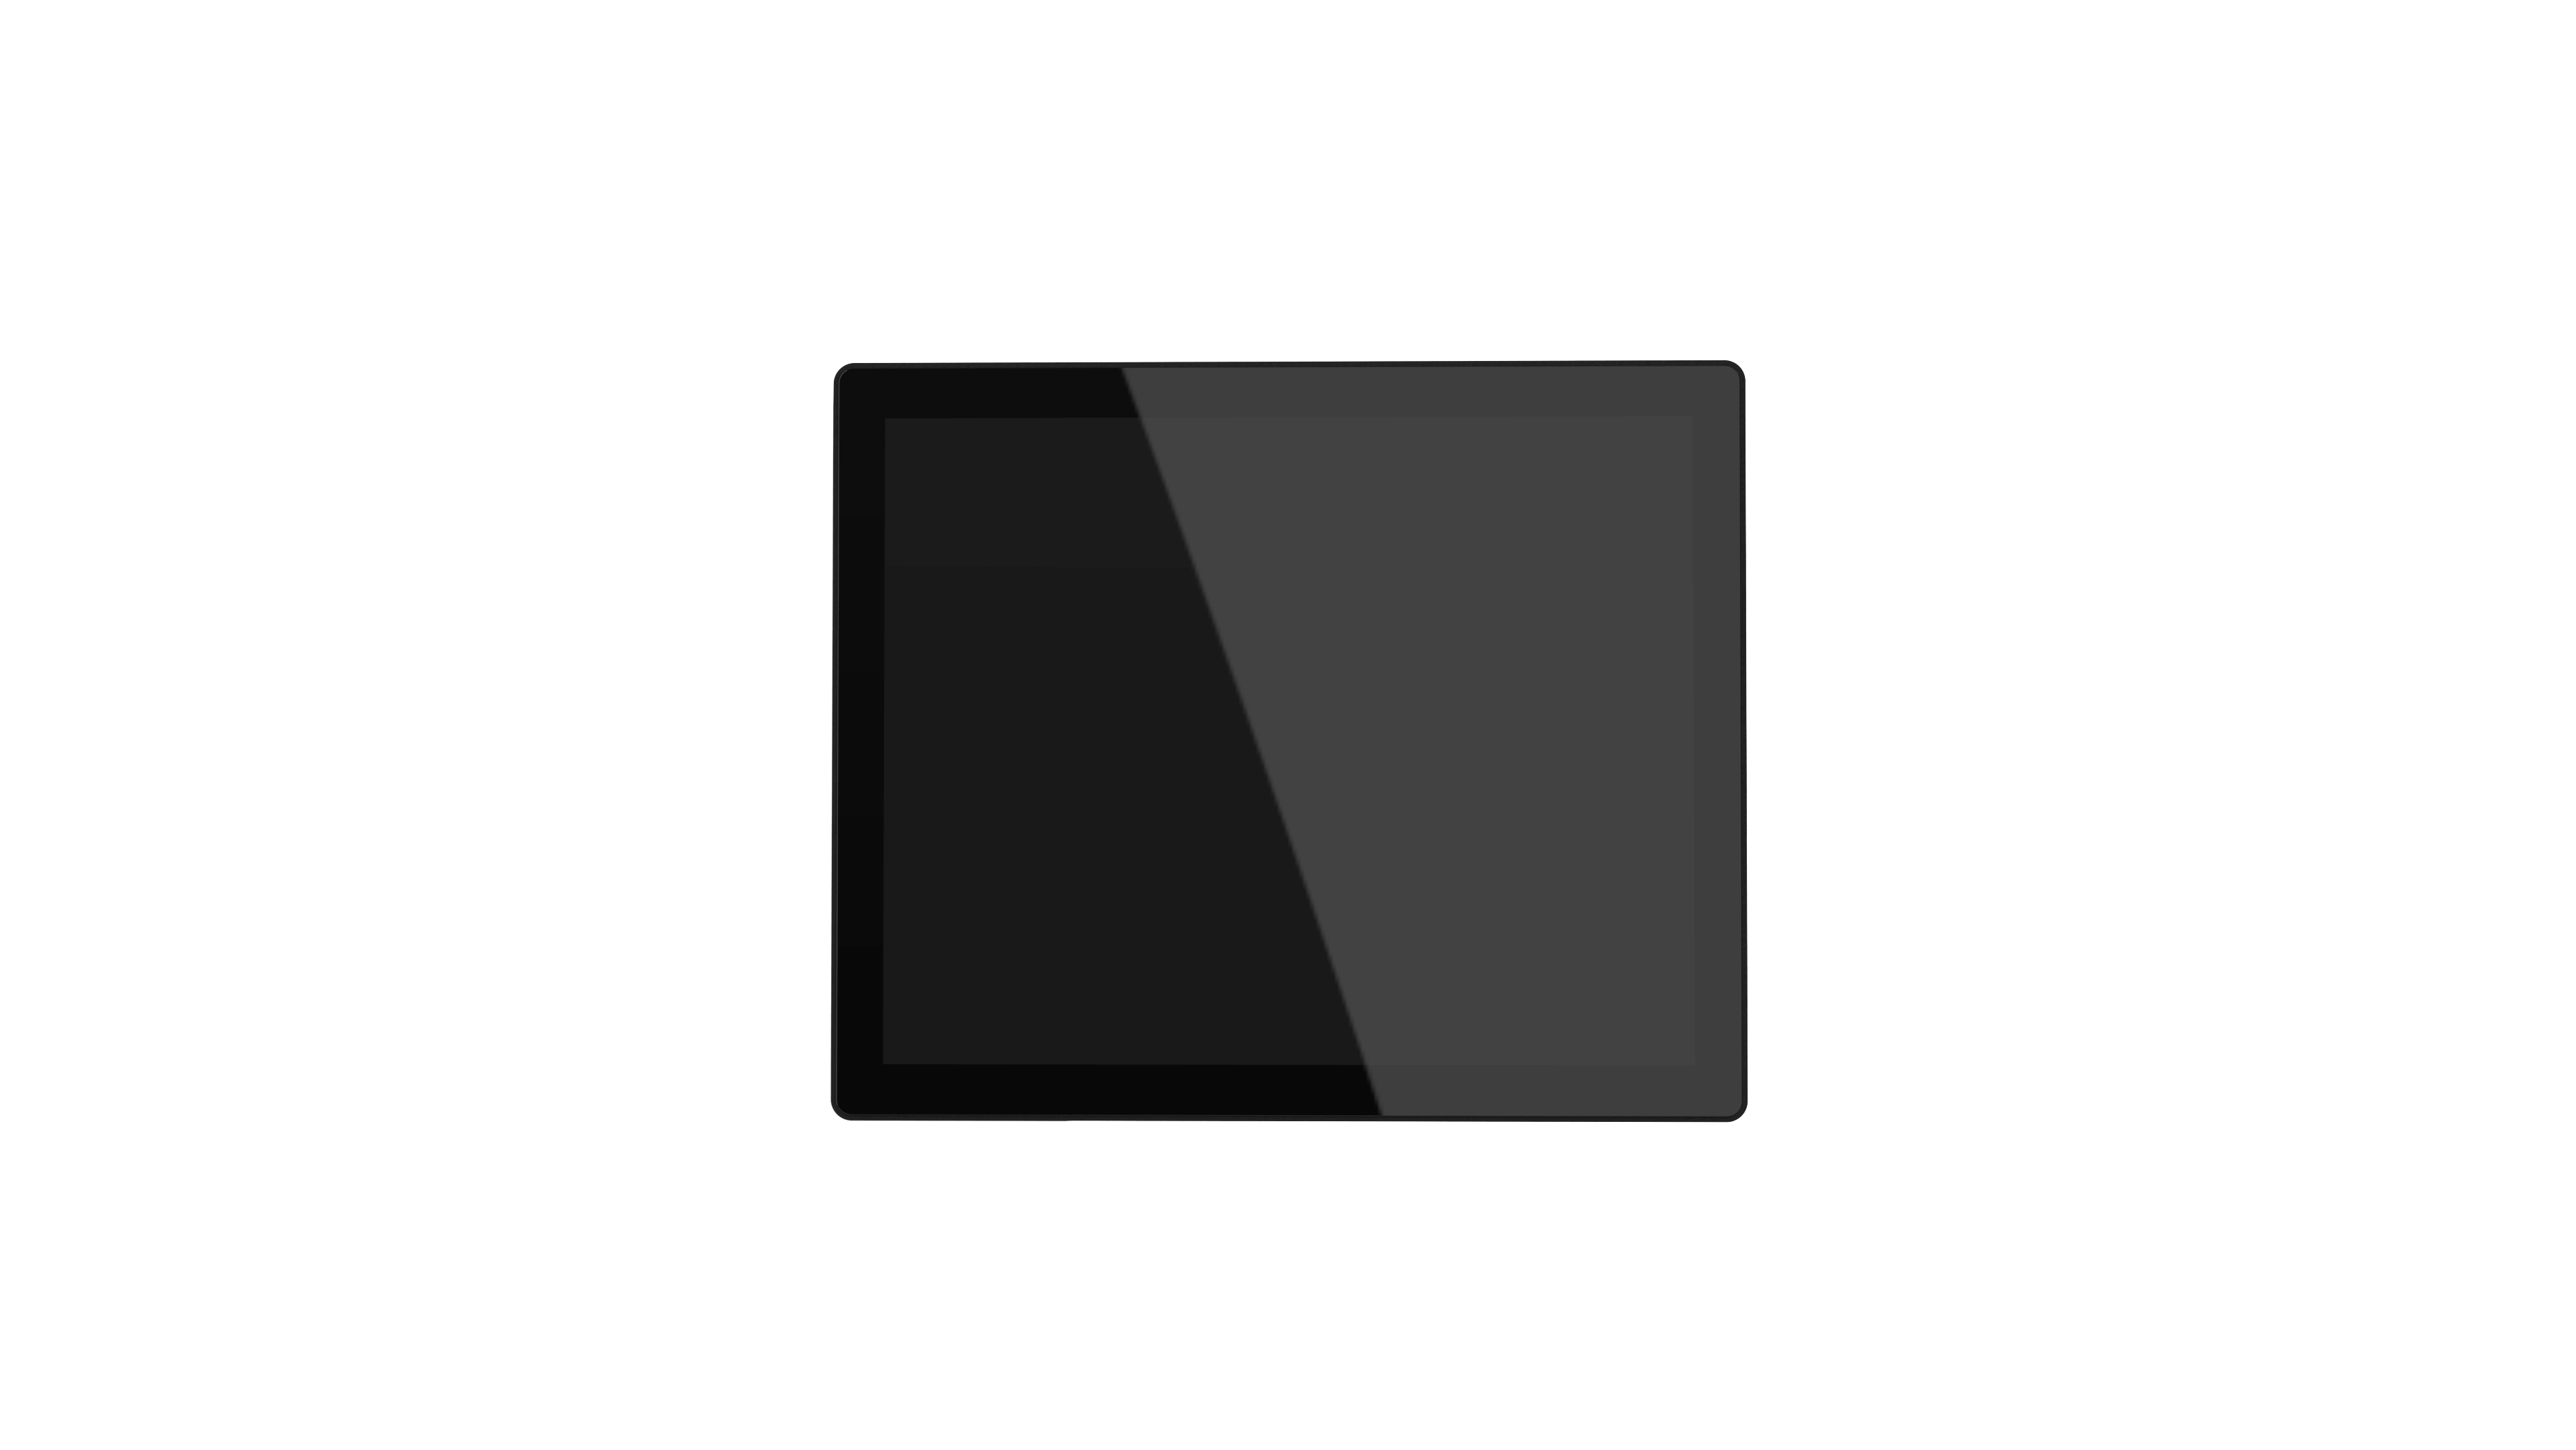 FIO-SX1900C 19" IP65 SXGA 5:4 Open Frame Industrial Touchscreen Monitor